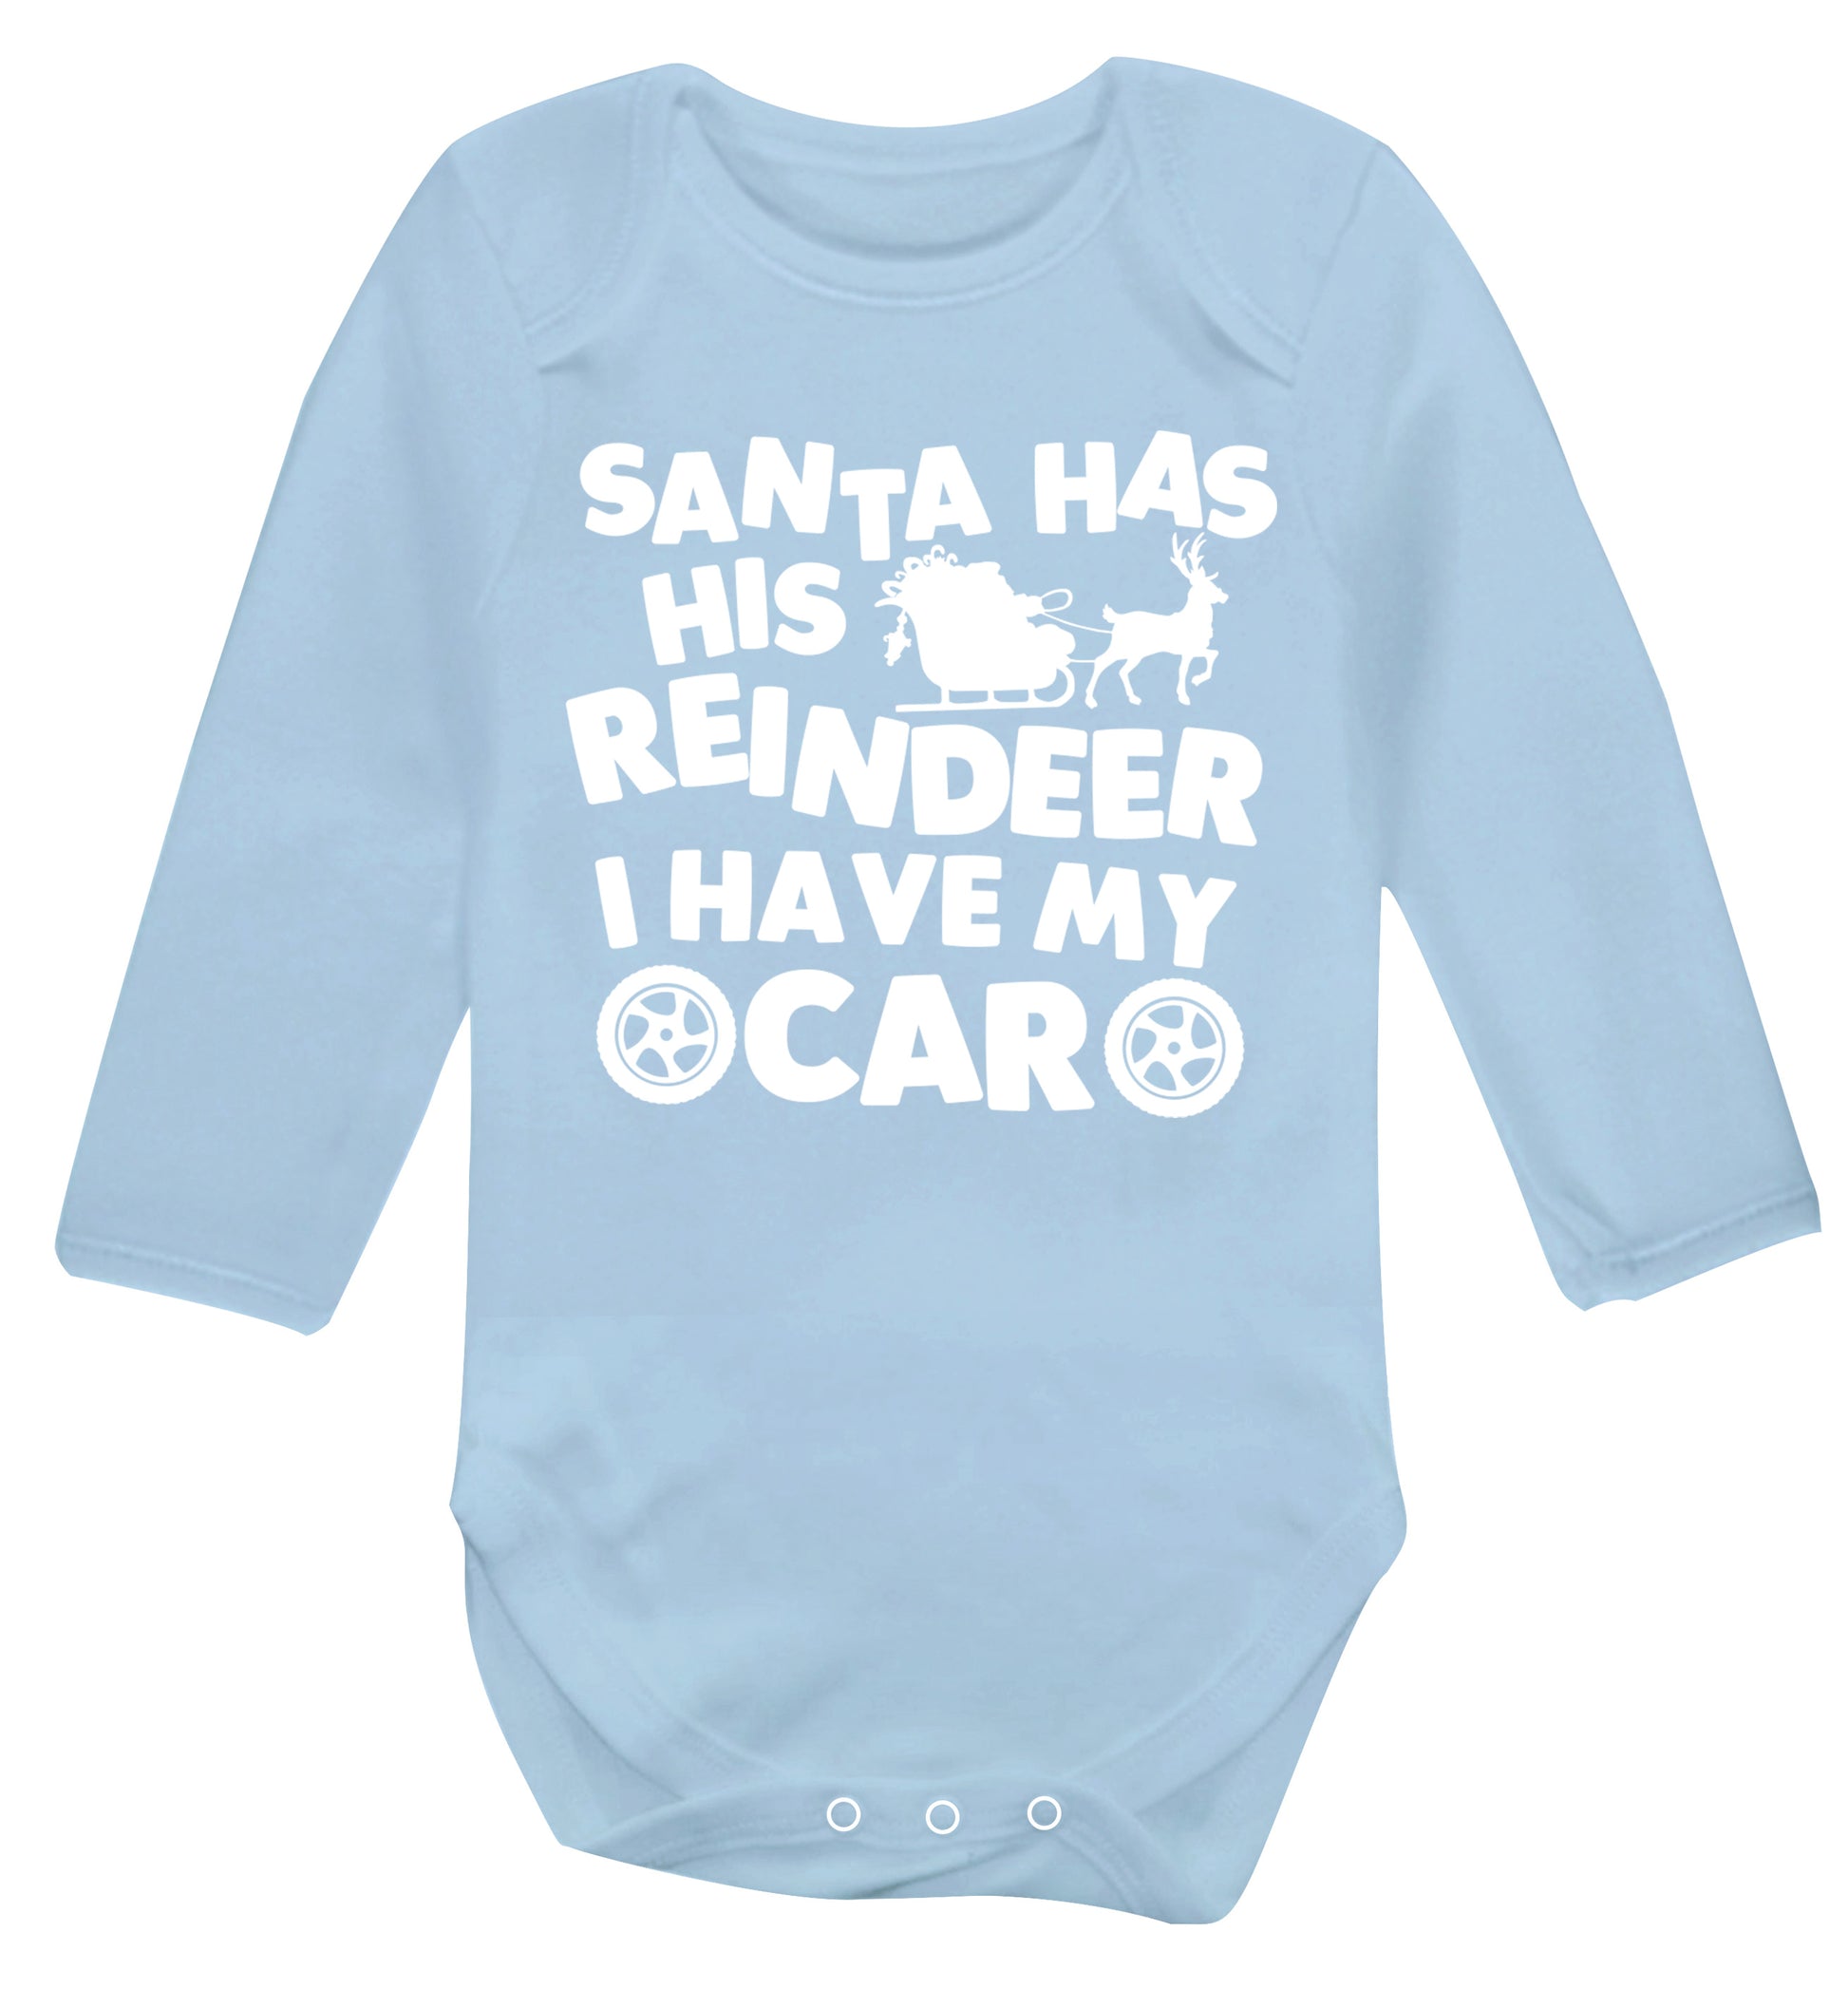 Santa has his reindeer I have my car Baby Vest long sleeved pale blue 6-12 months